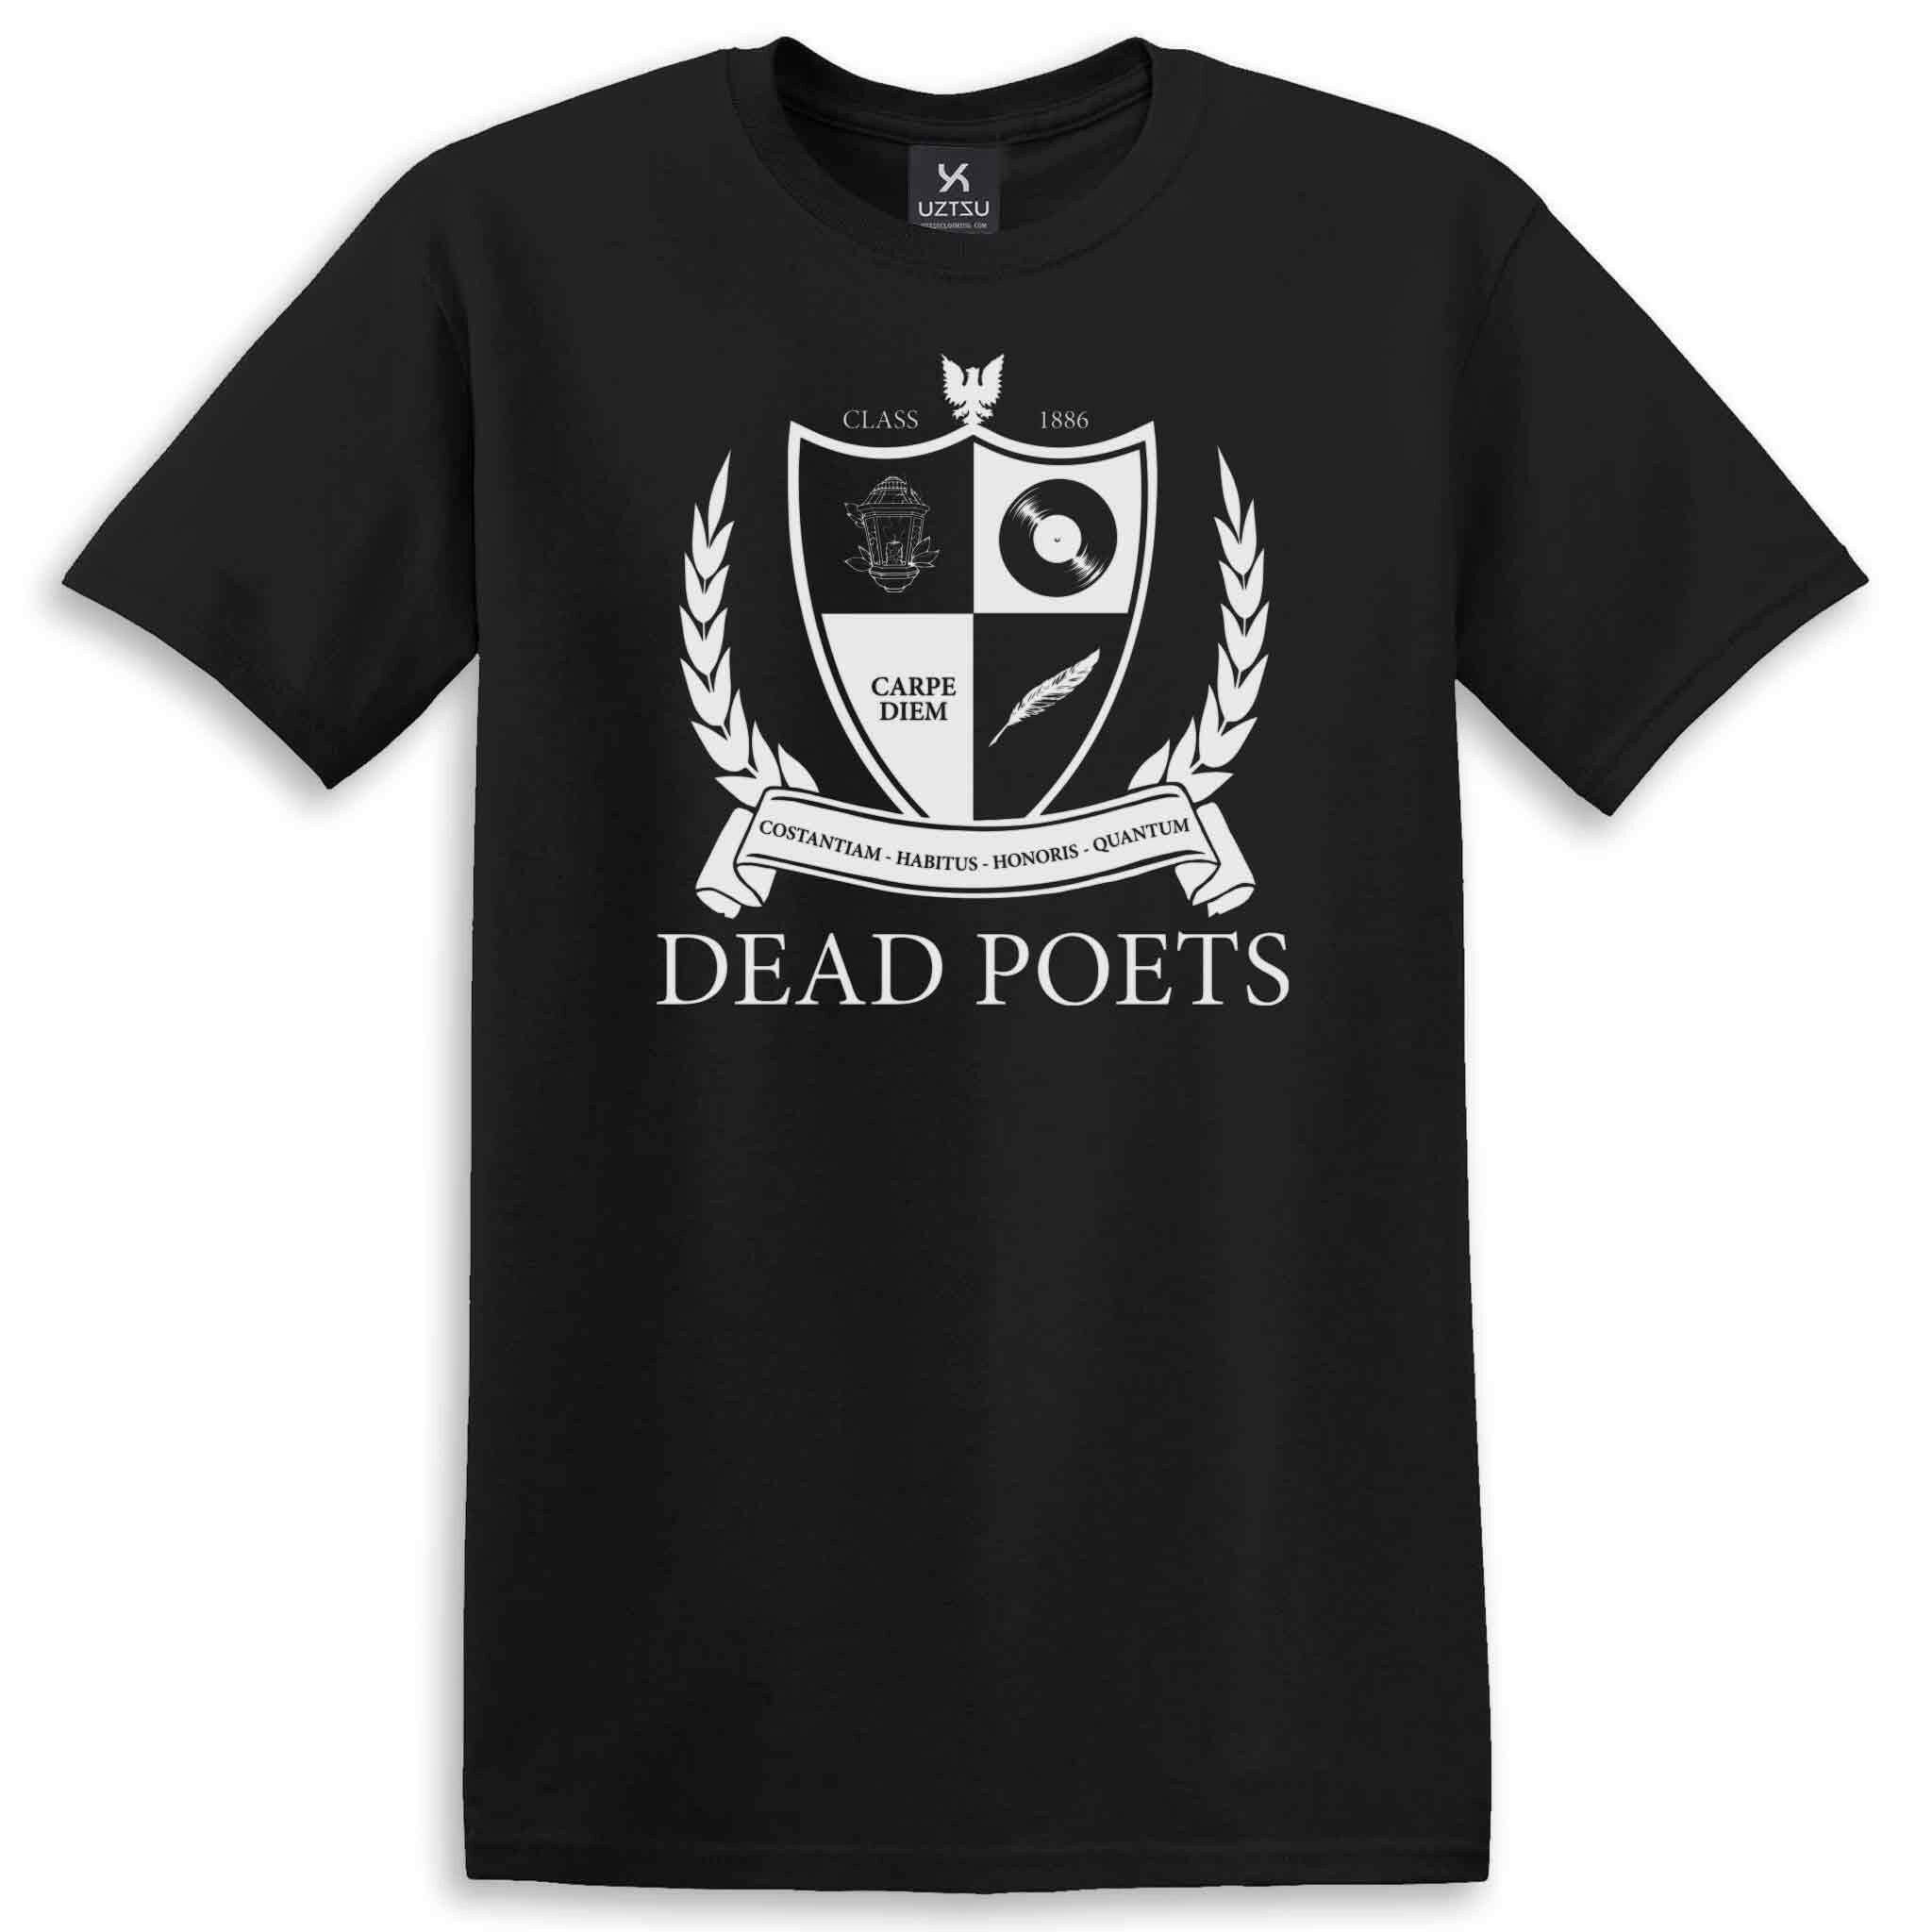 Classic Logo Dj Fastcut Dead Poets black T-shirt.